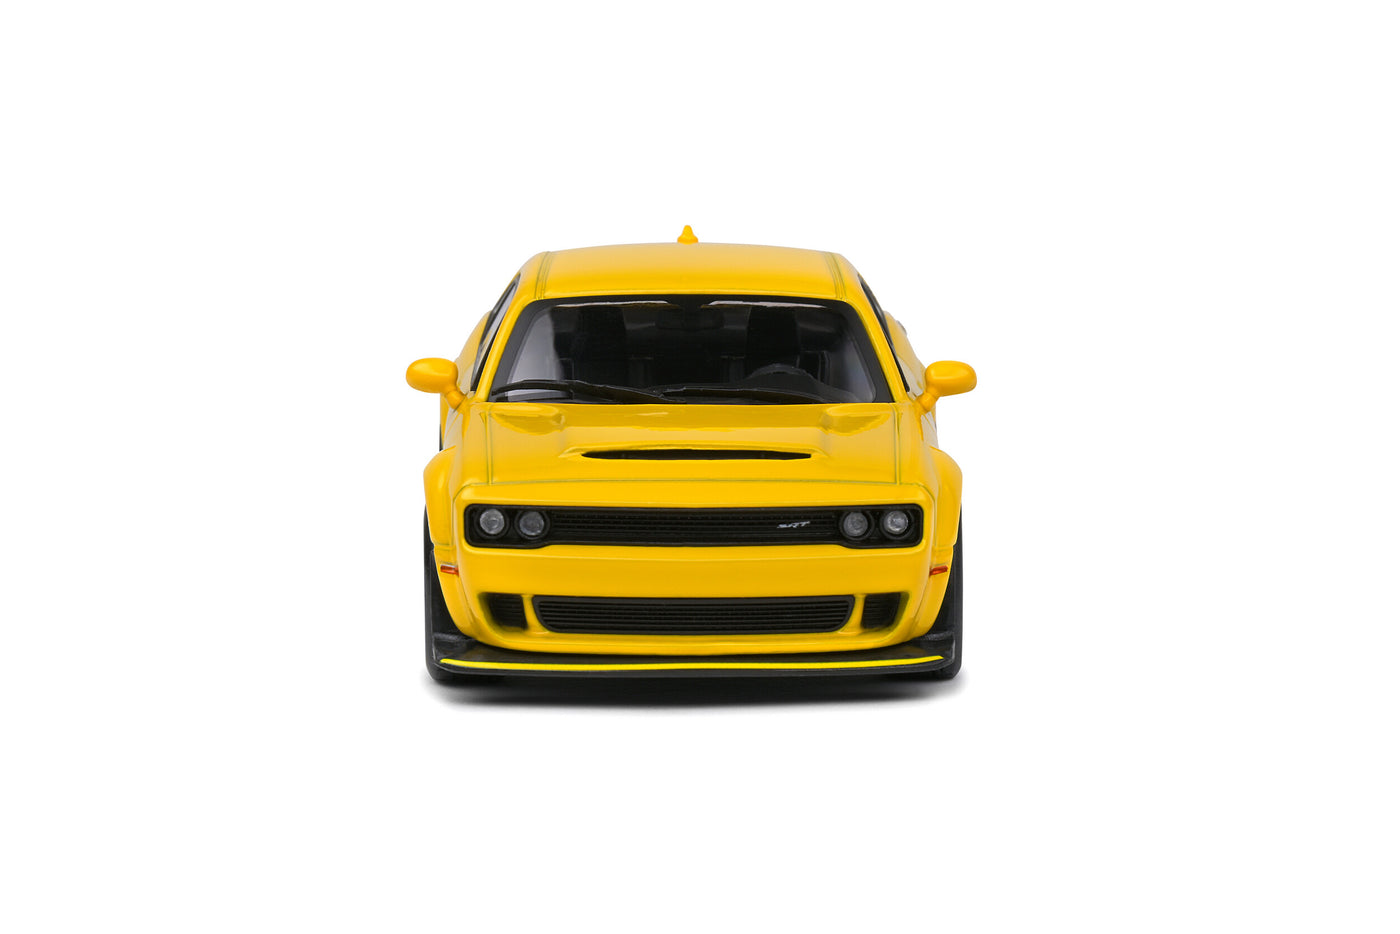 Solido: Dodge Challenger- Demon Yellow Die-cast Scale Model (1:43)